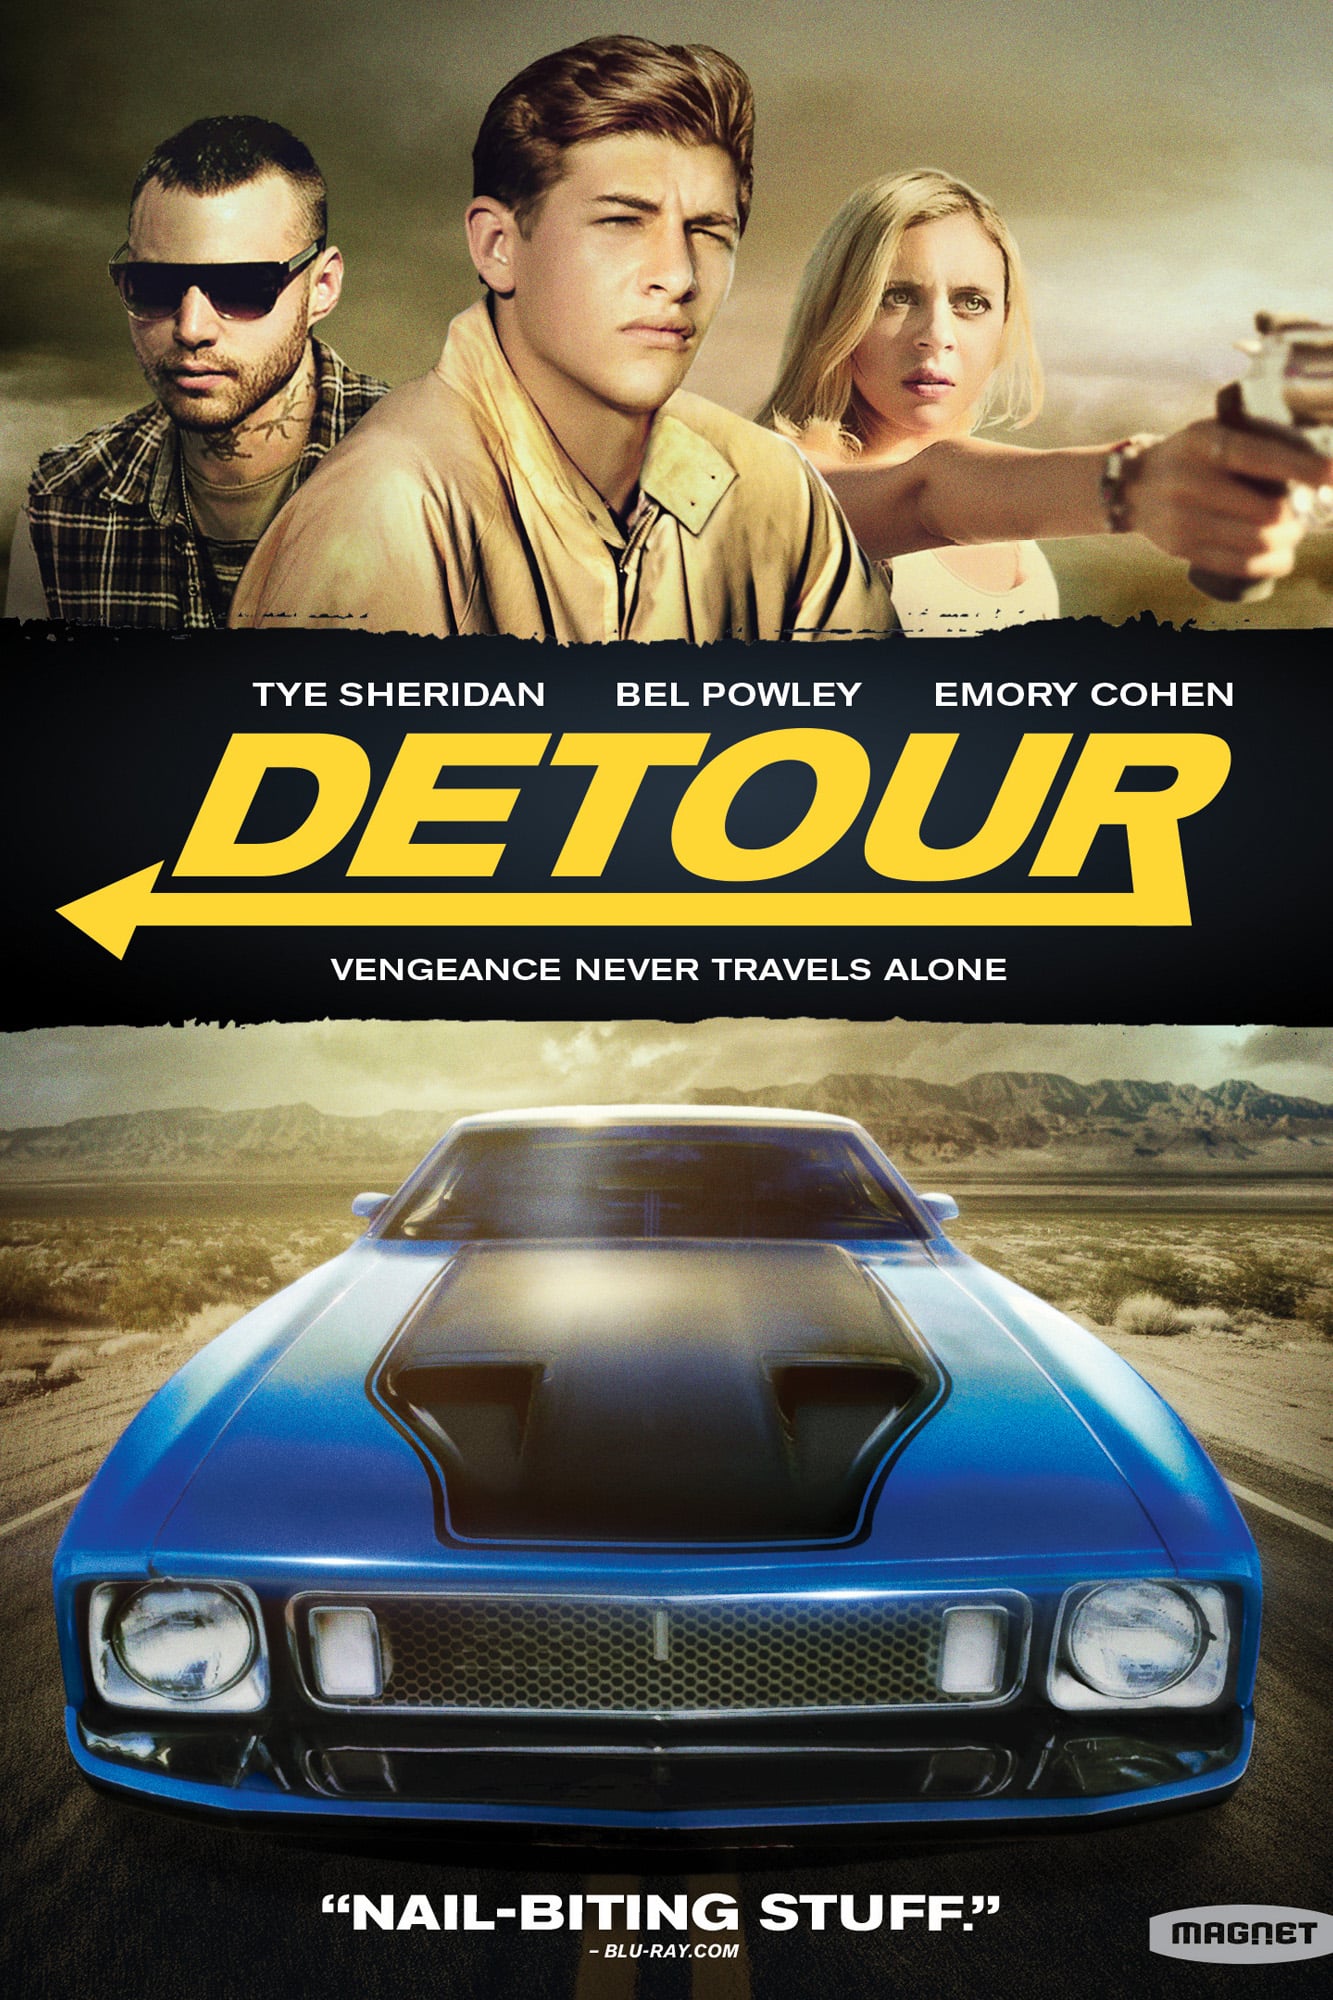 Poster for the movie "Detour"